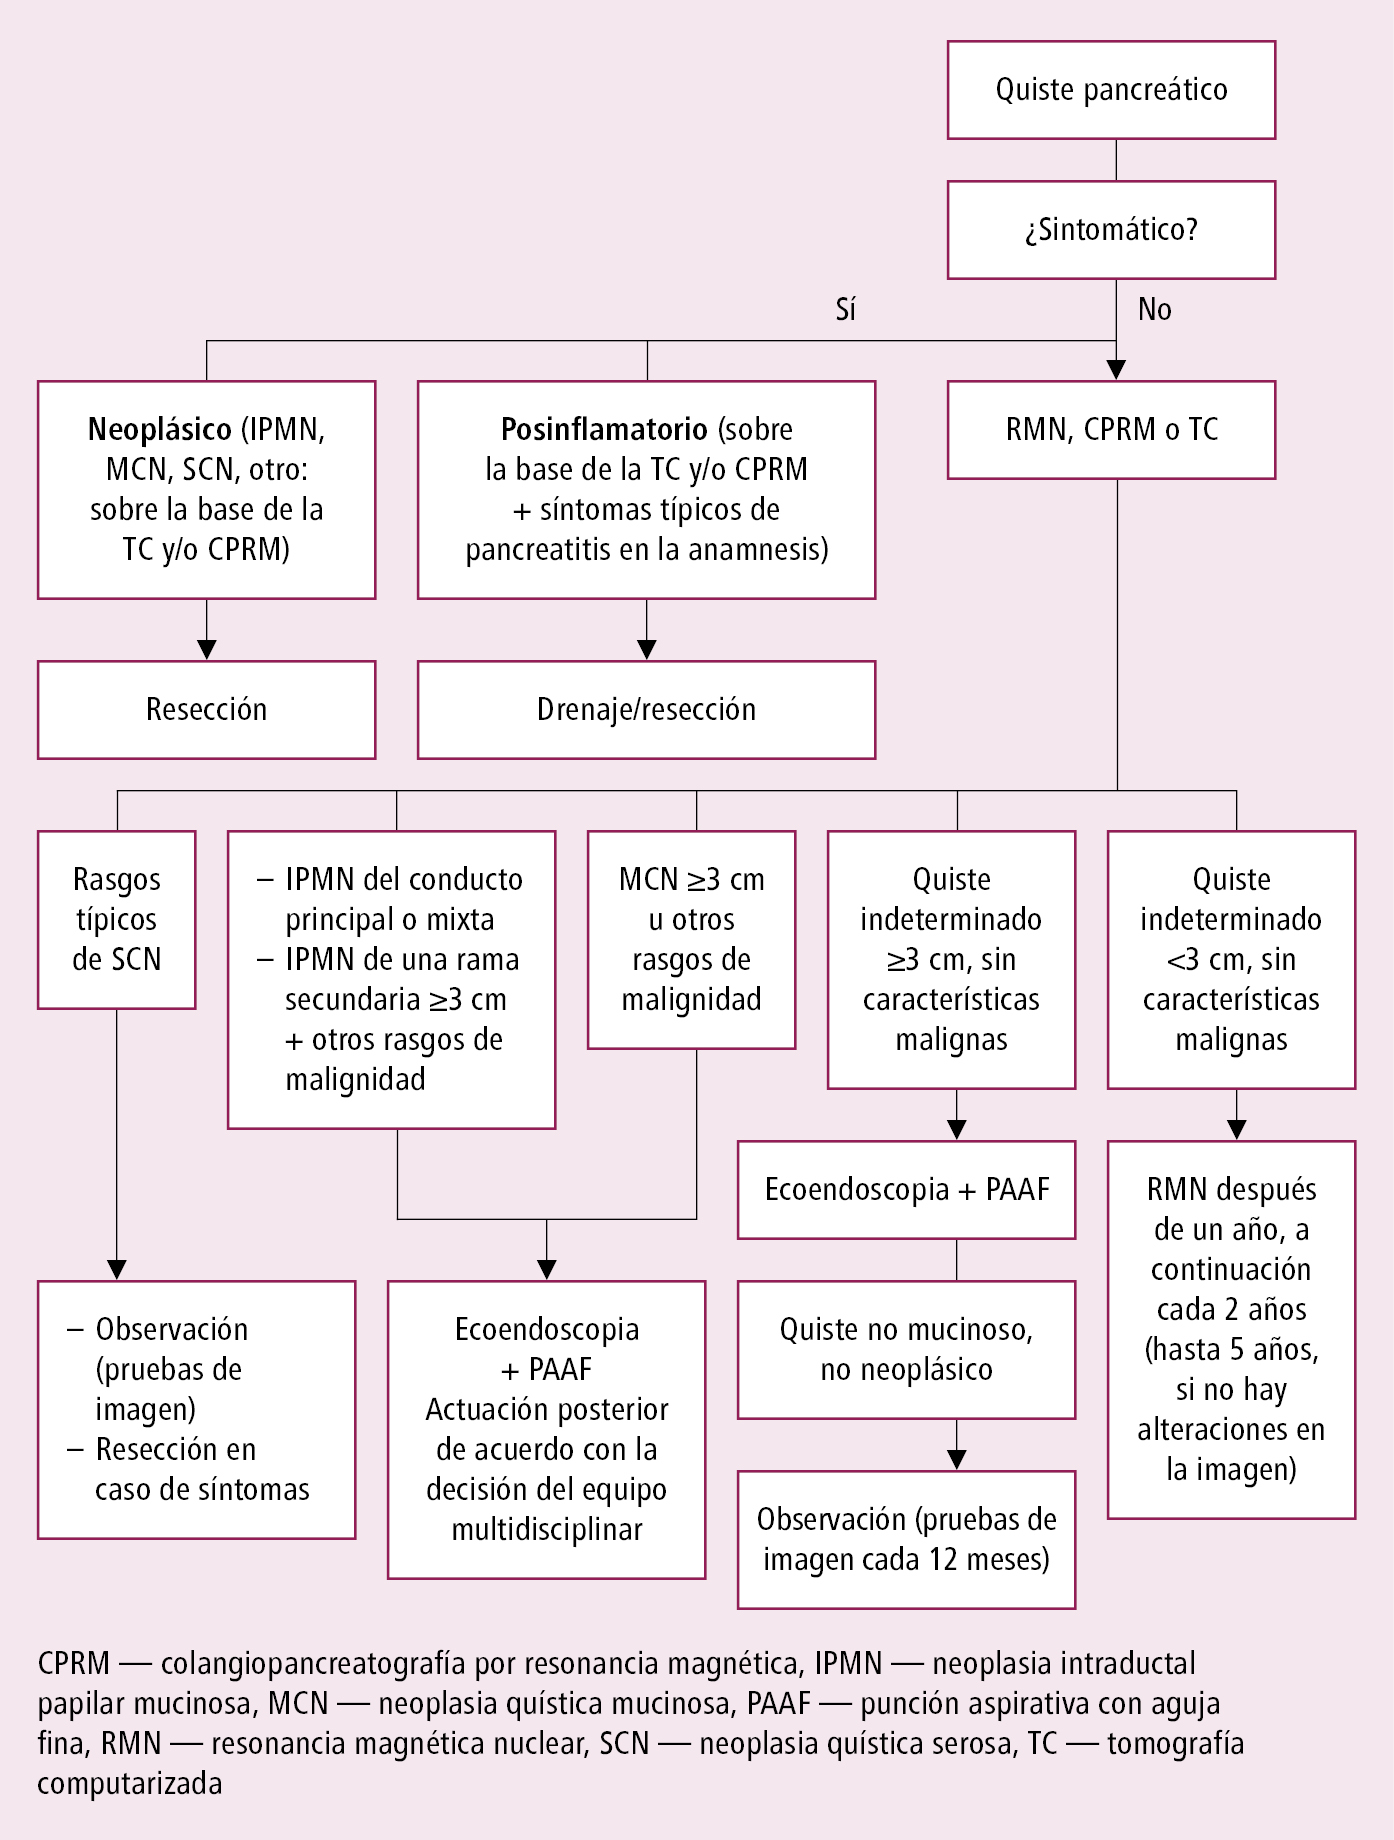    Fig. 5.3-1.  Algoritmo de actuación tras diagnosticar quistes pancreáticos 